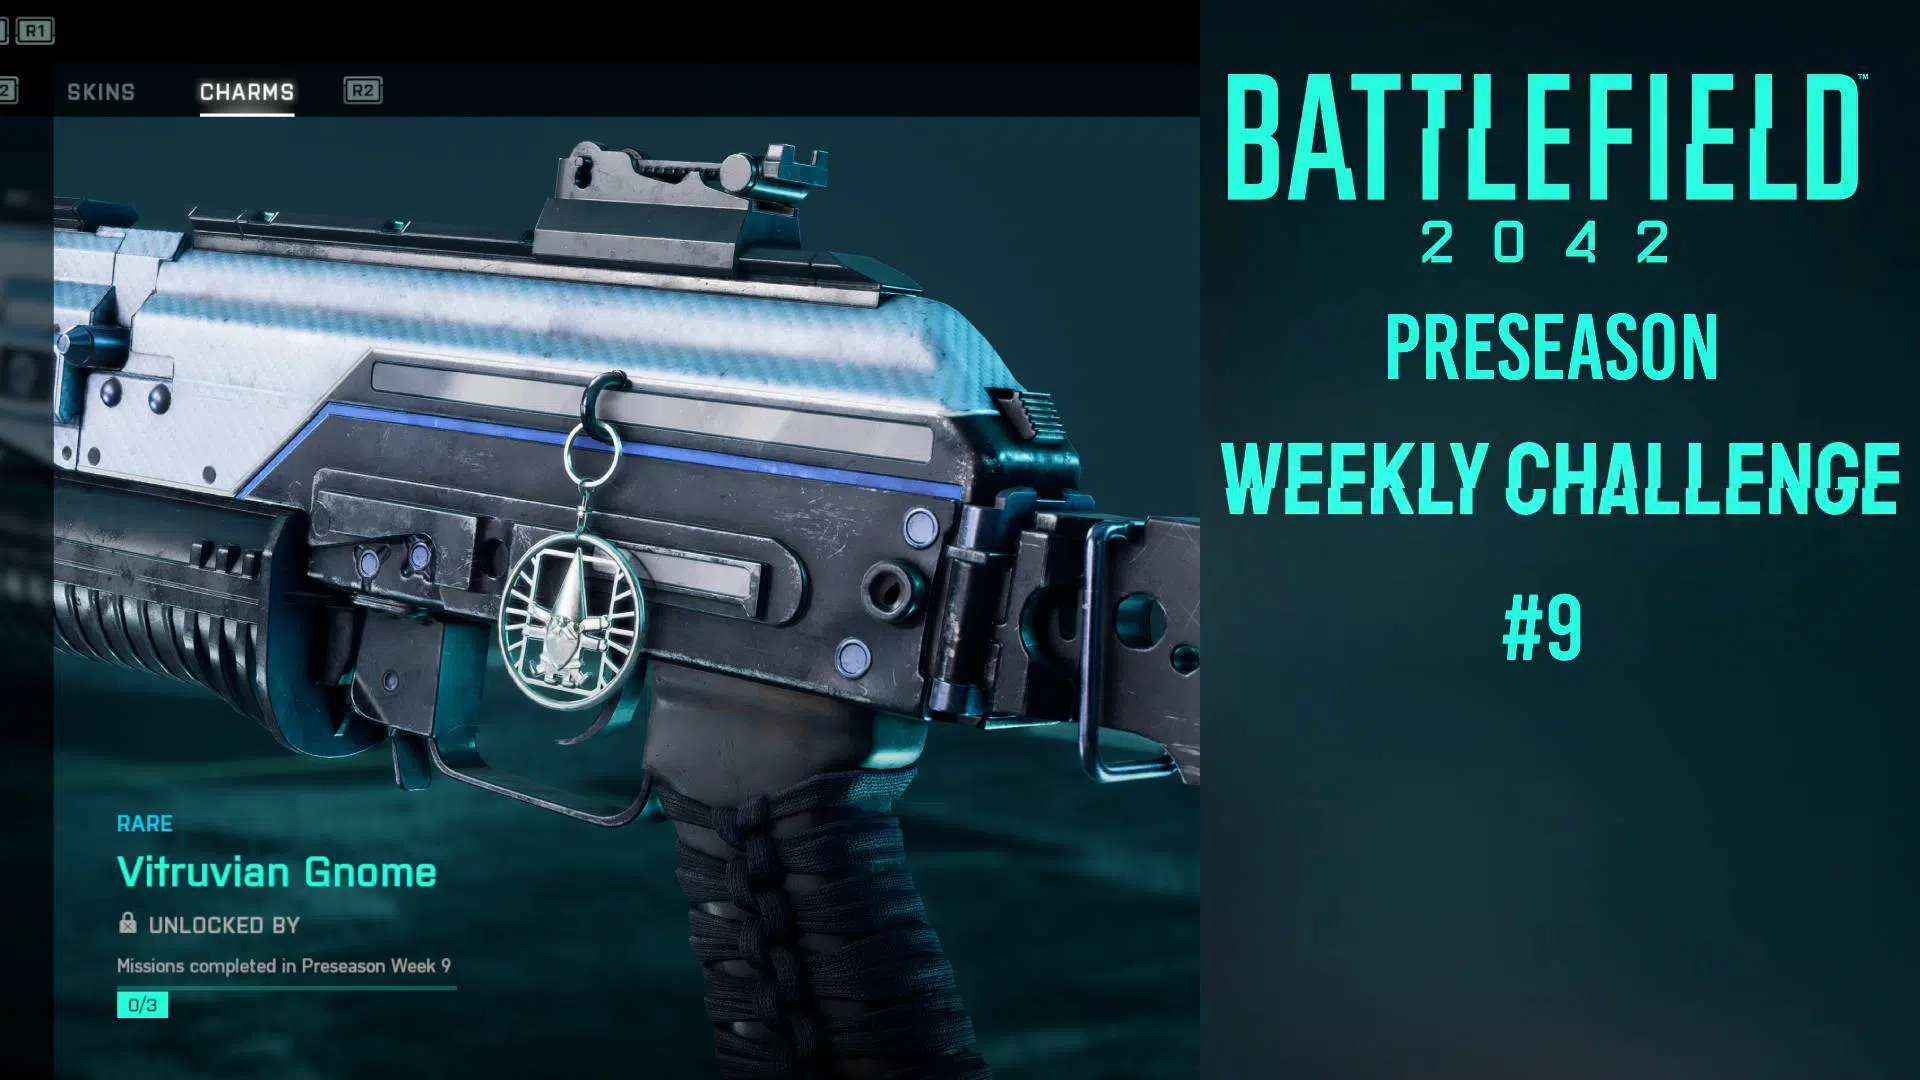 Battlefield 2042 Weekly Reset Challenge #9 (Feb 3 - Feb 10) Reward Vitruvian Gnome Weapon Charm